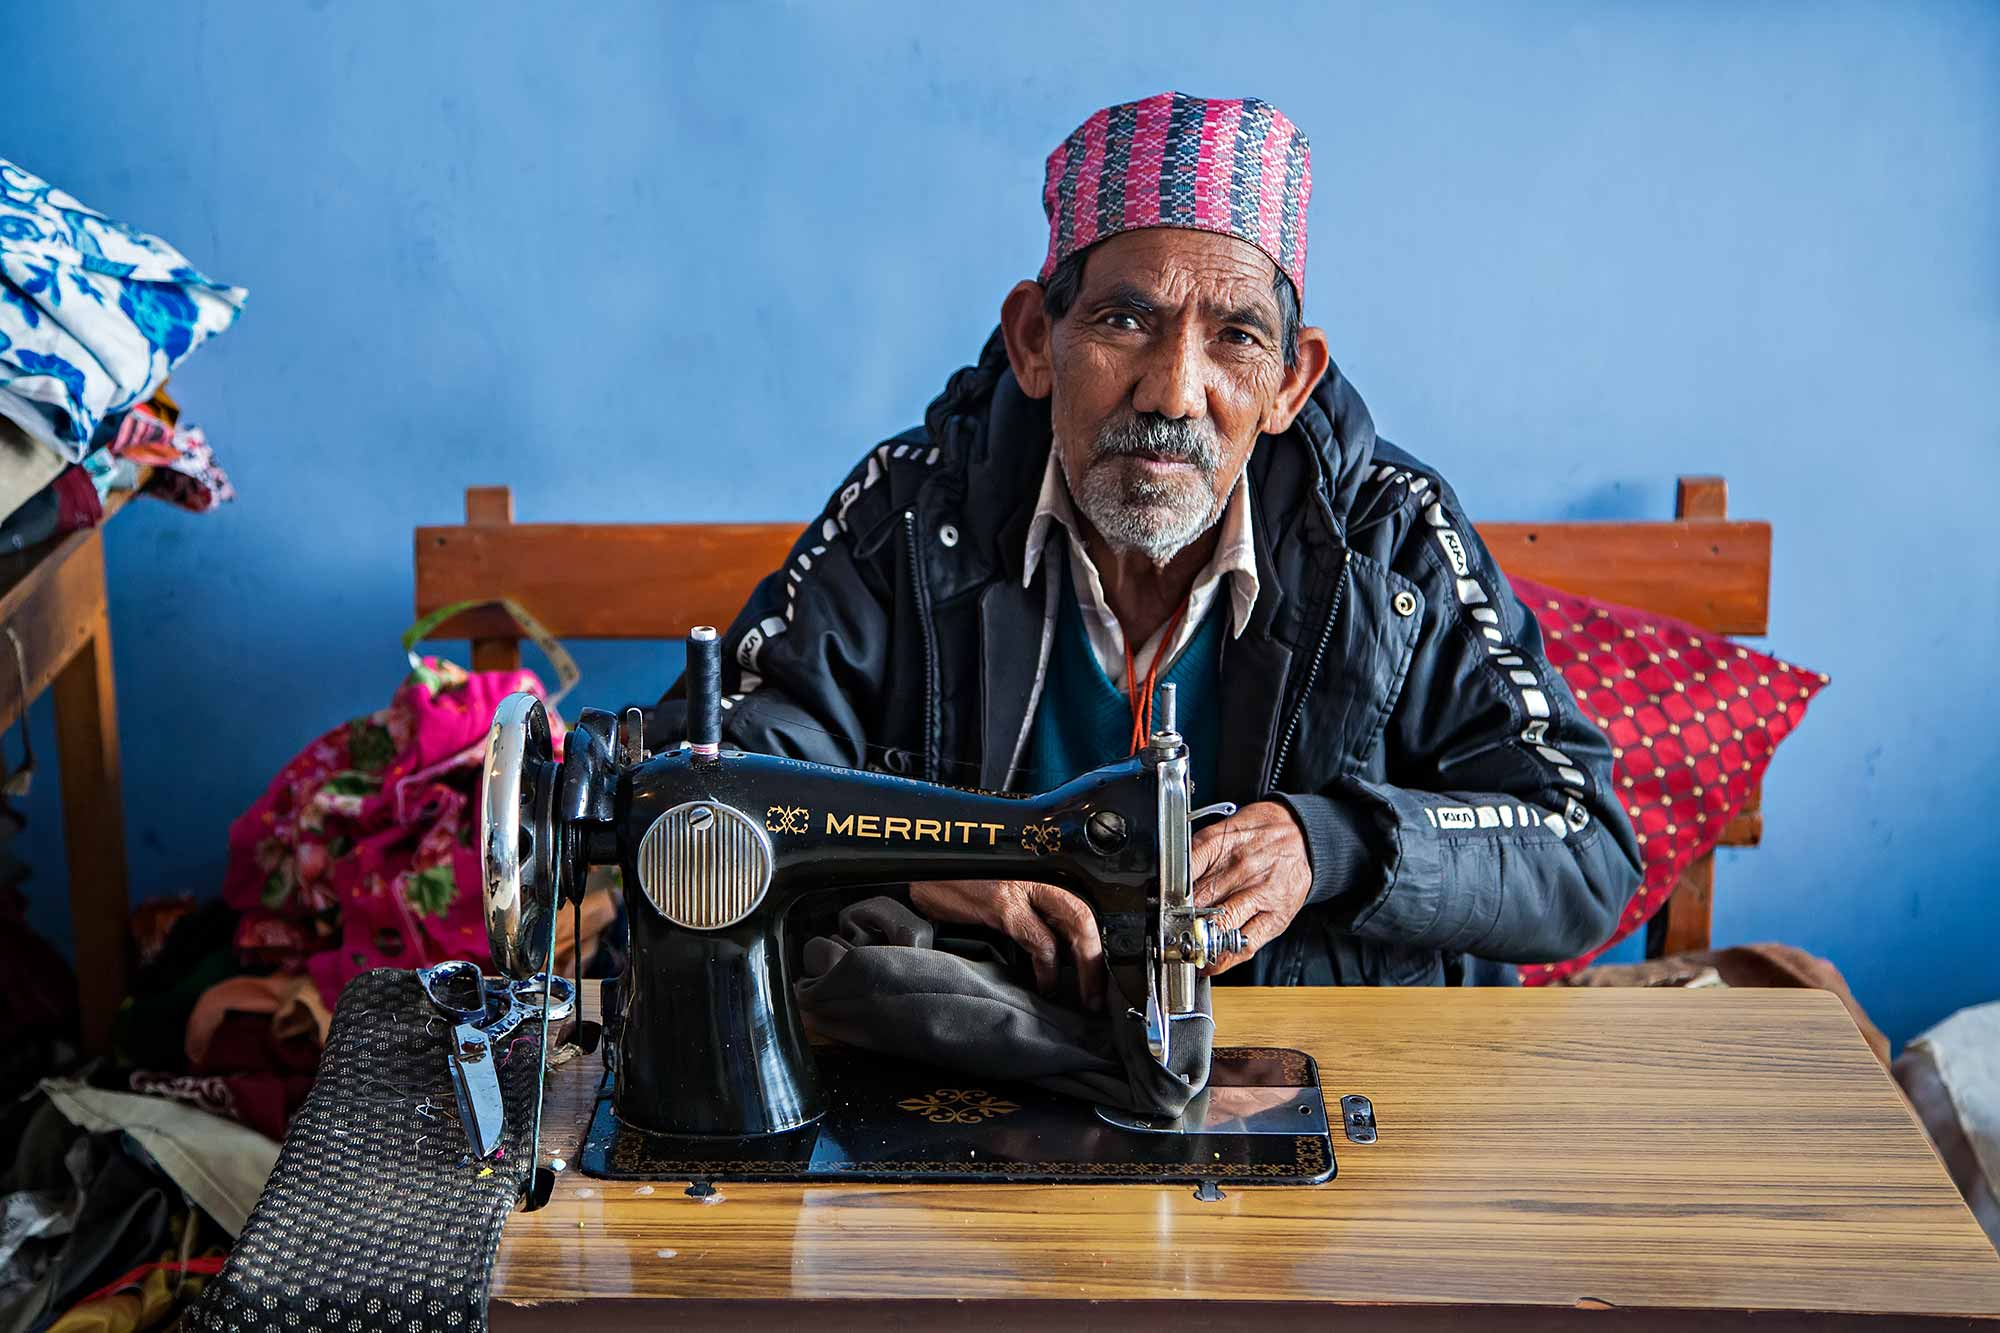 tailor-gangtok-sikkim-india